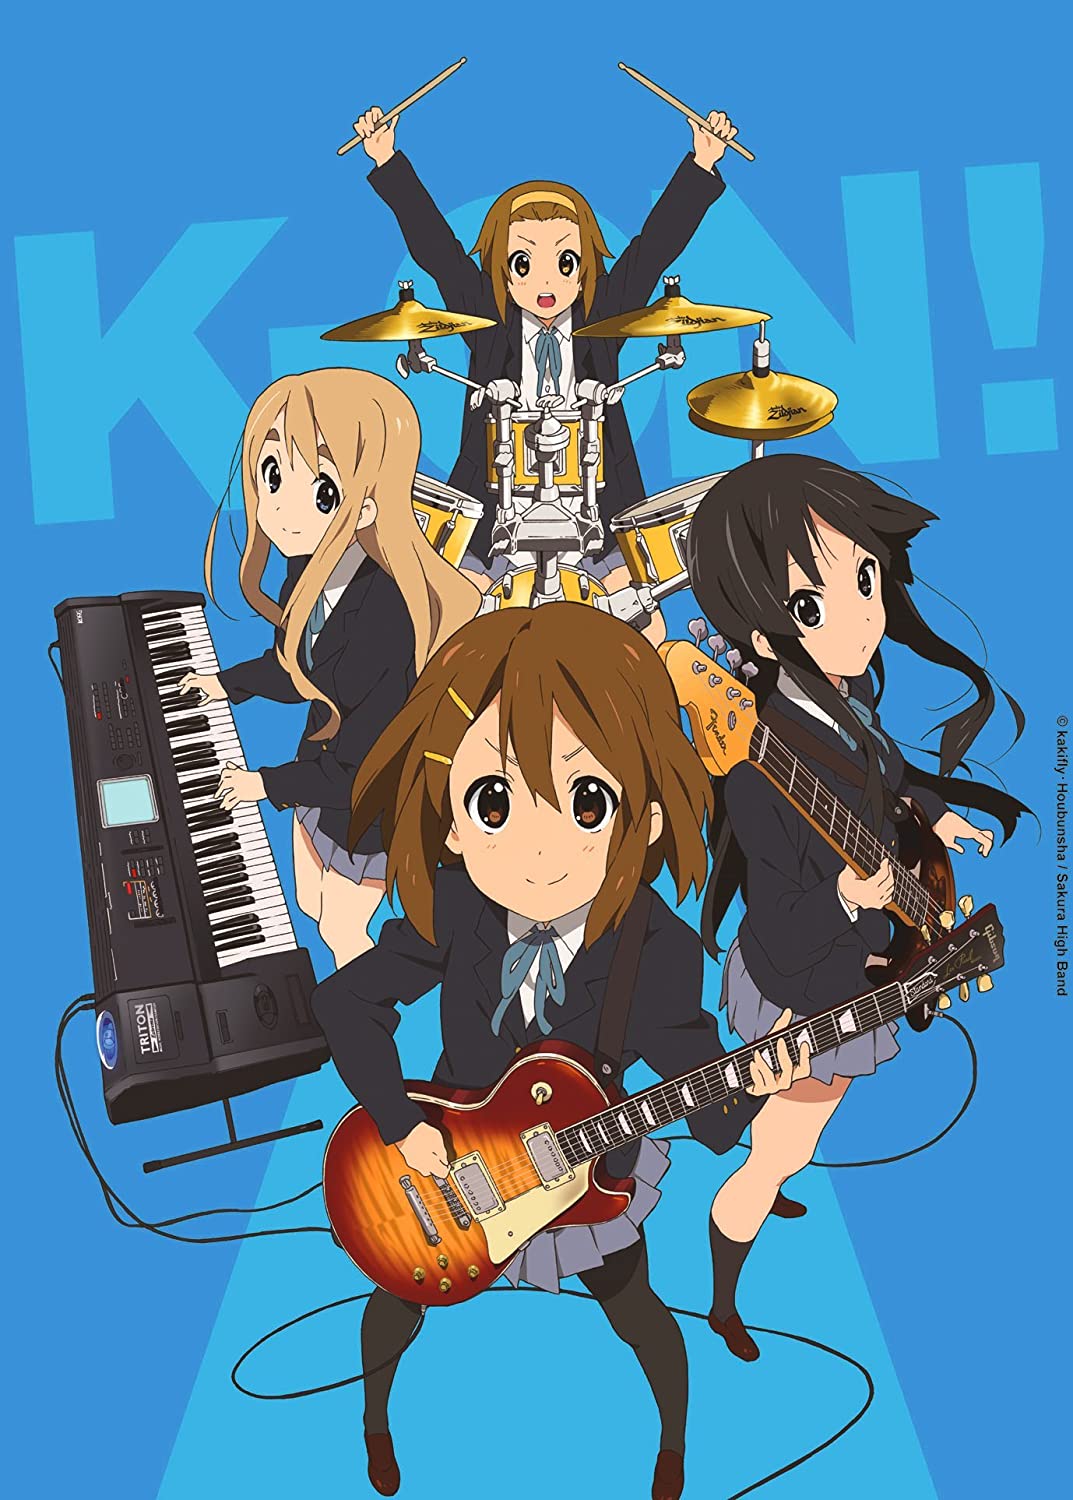 K-ON! - ANISON.FM - anime radio #1 in the world